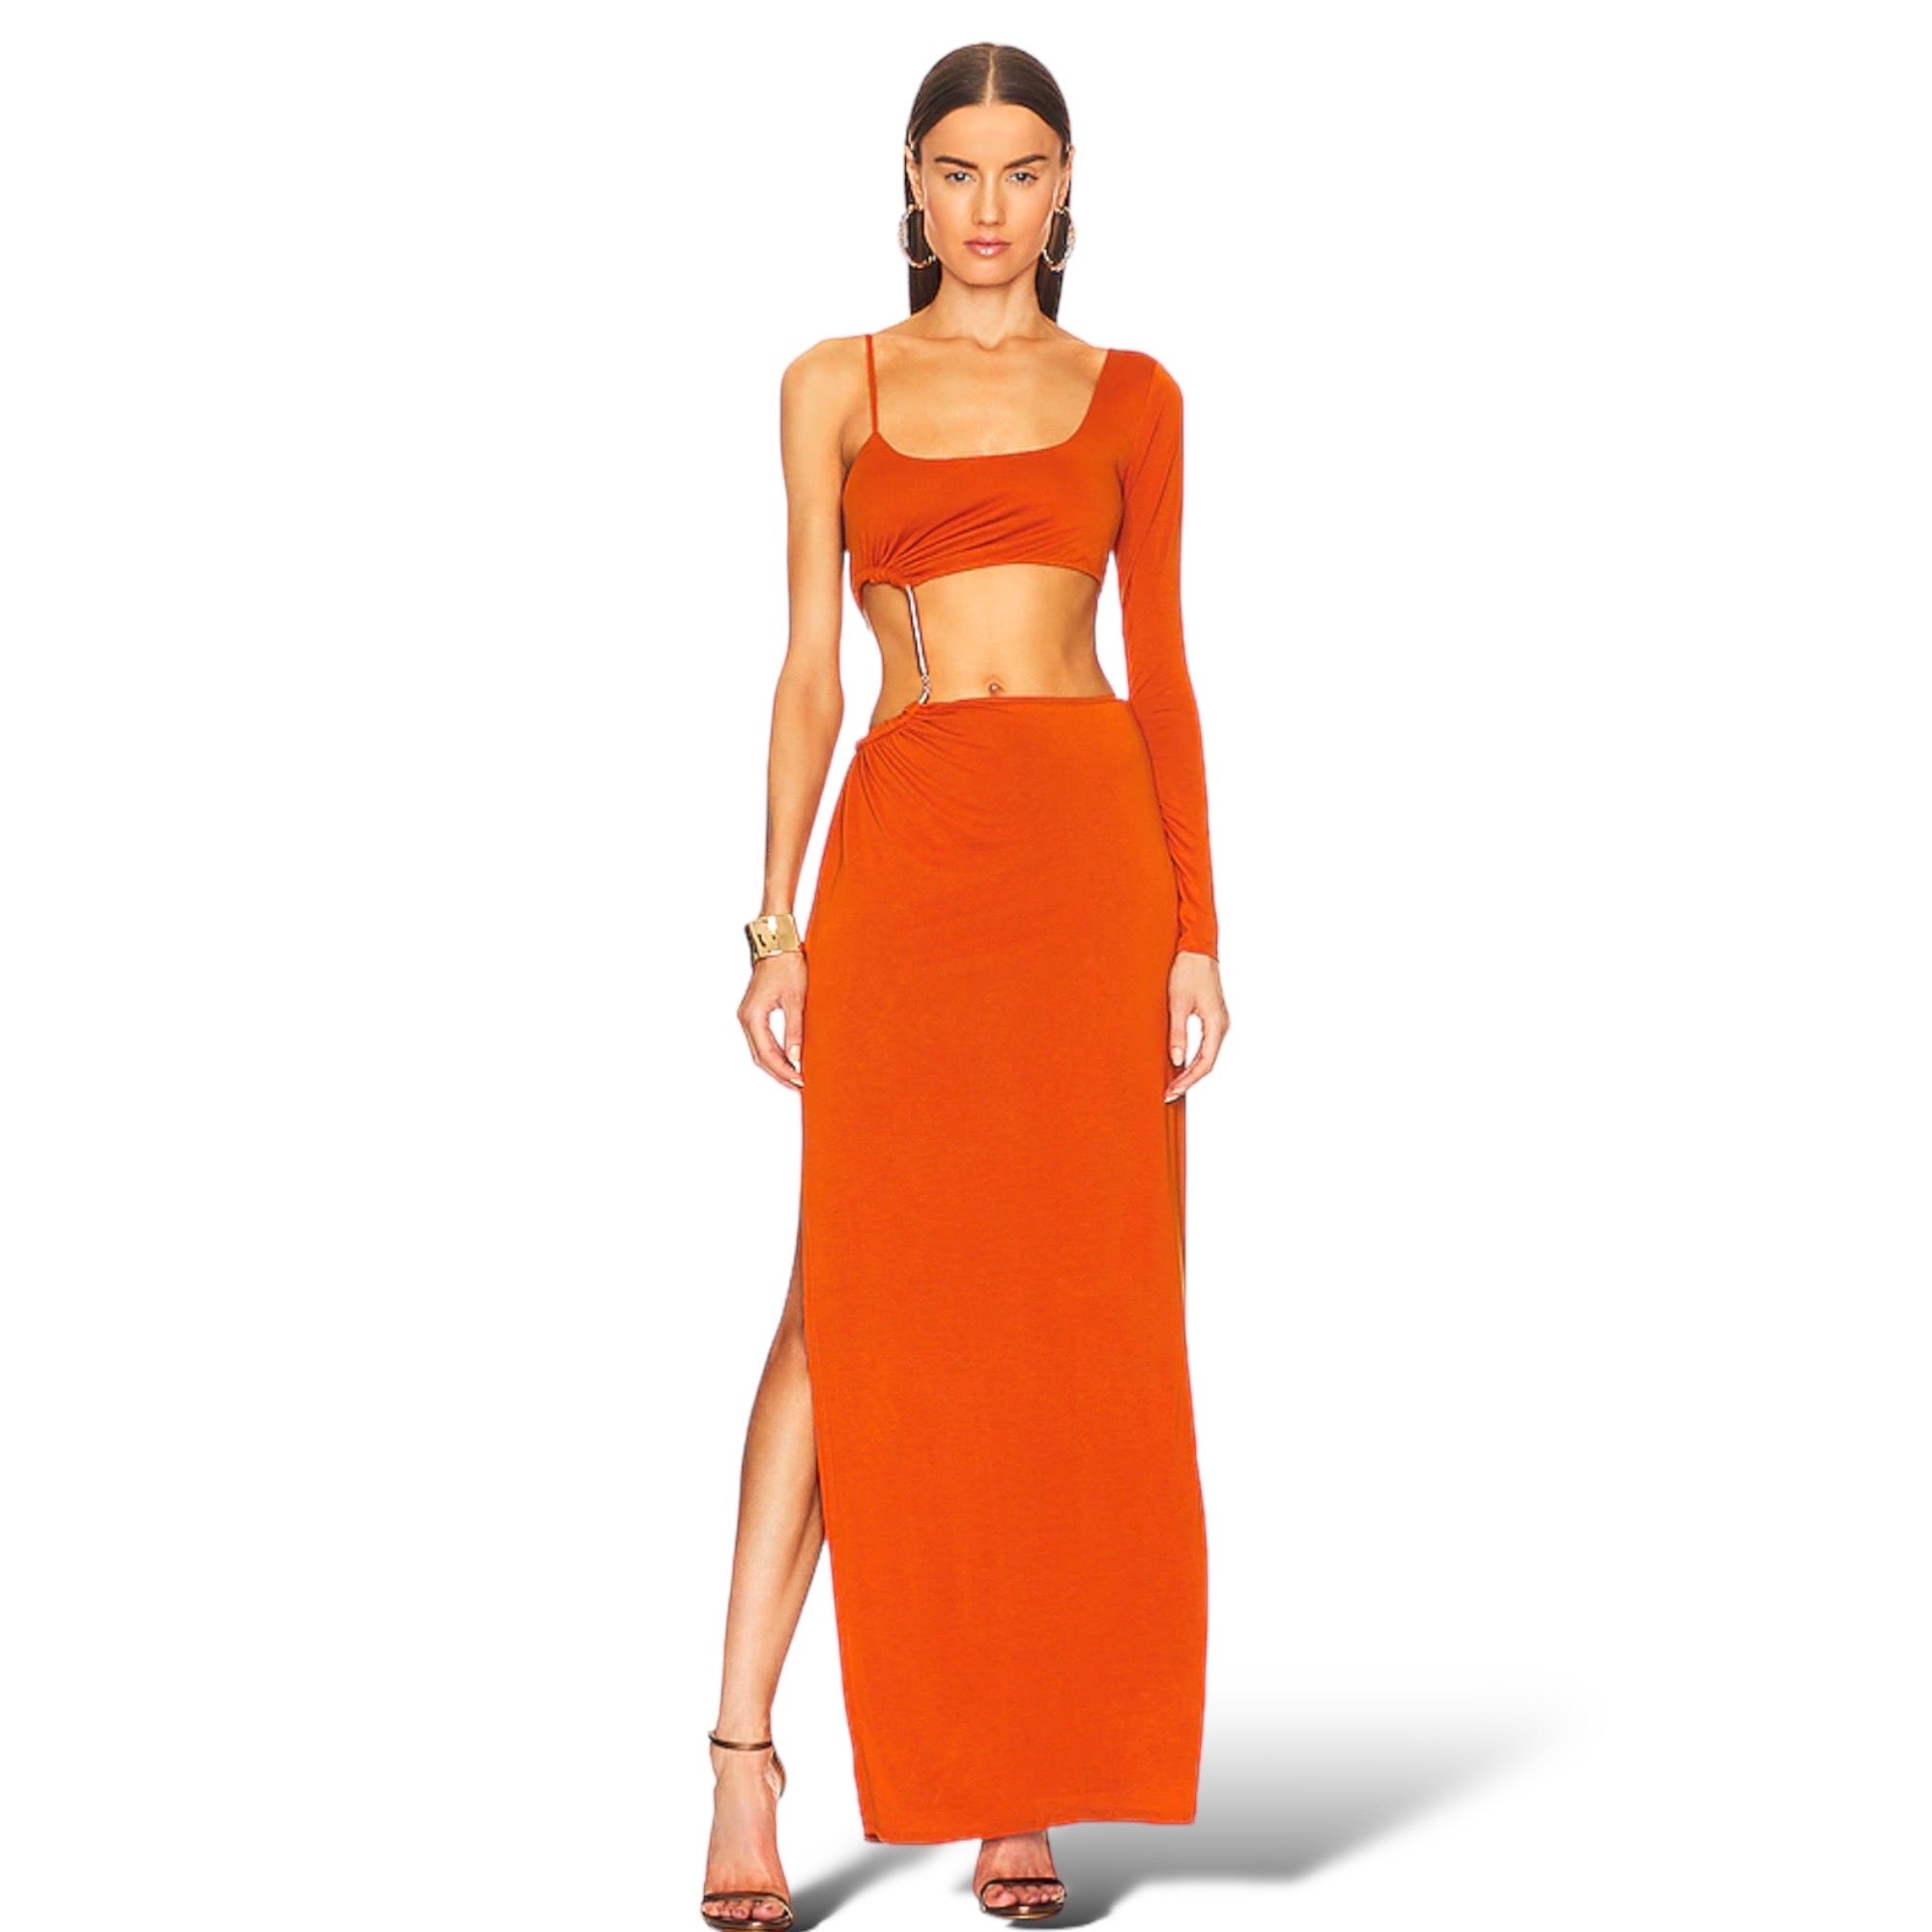 CAMILA COELHO Jocelyn Maxi Dress in Rust
|Size: XS|